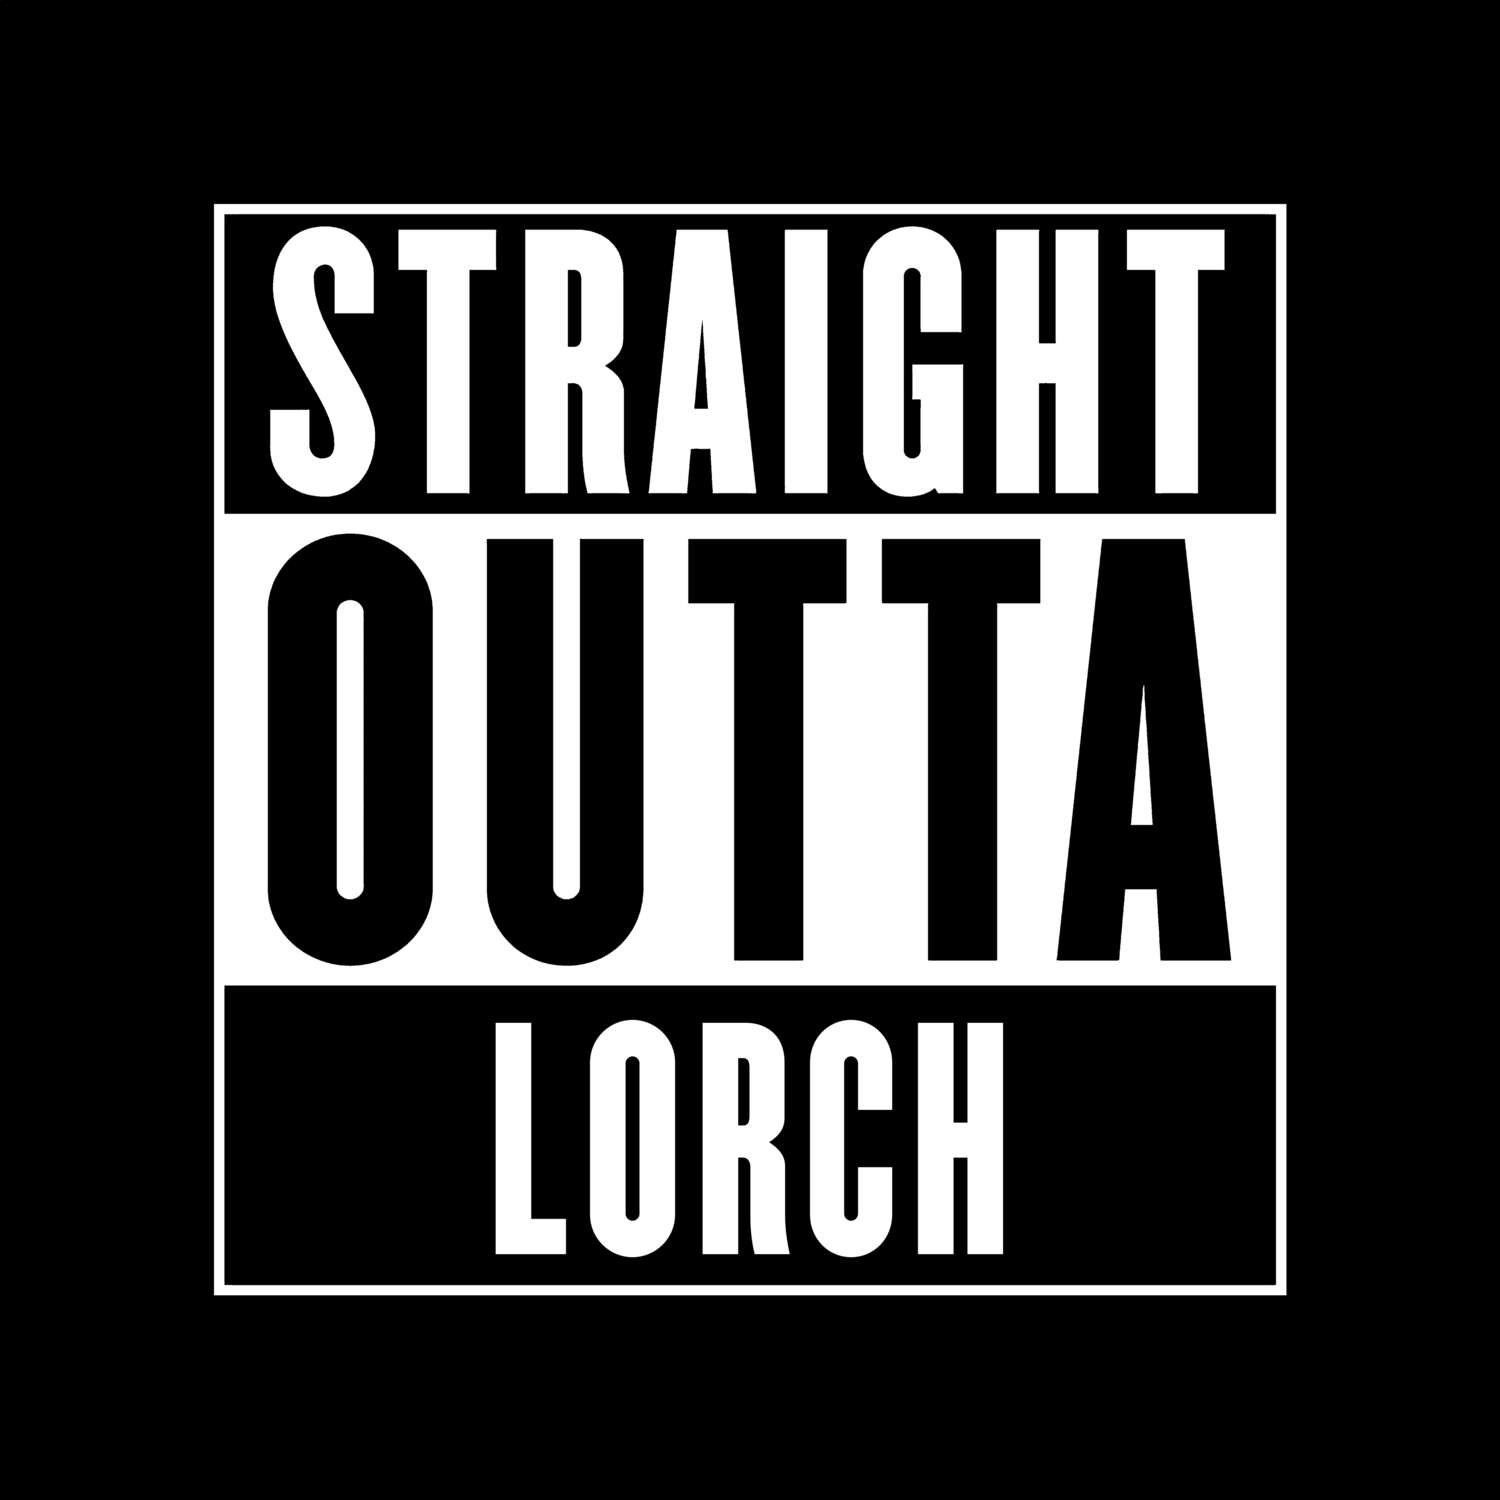 Lorch T-Shirt »Straight Outta«